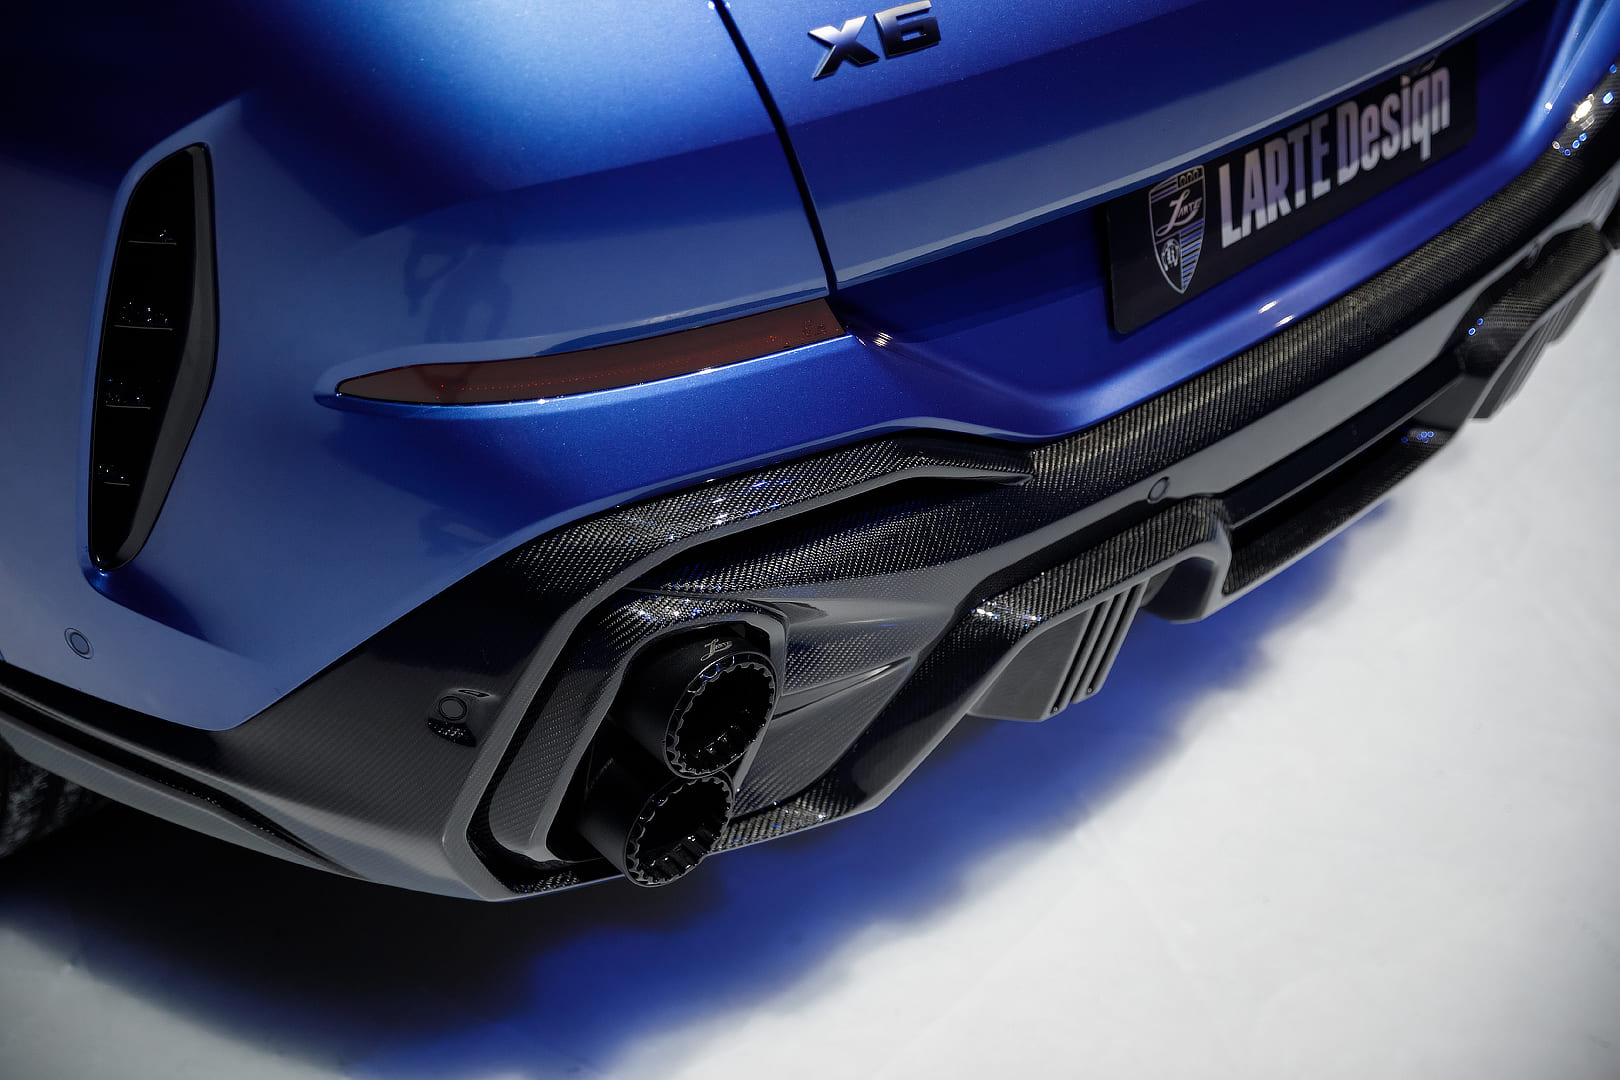 Check price and buy LARTE Design body kit for BMW X6 G06